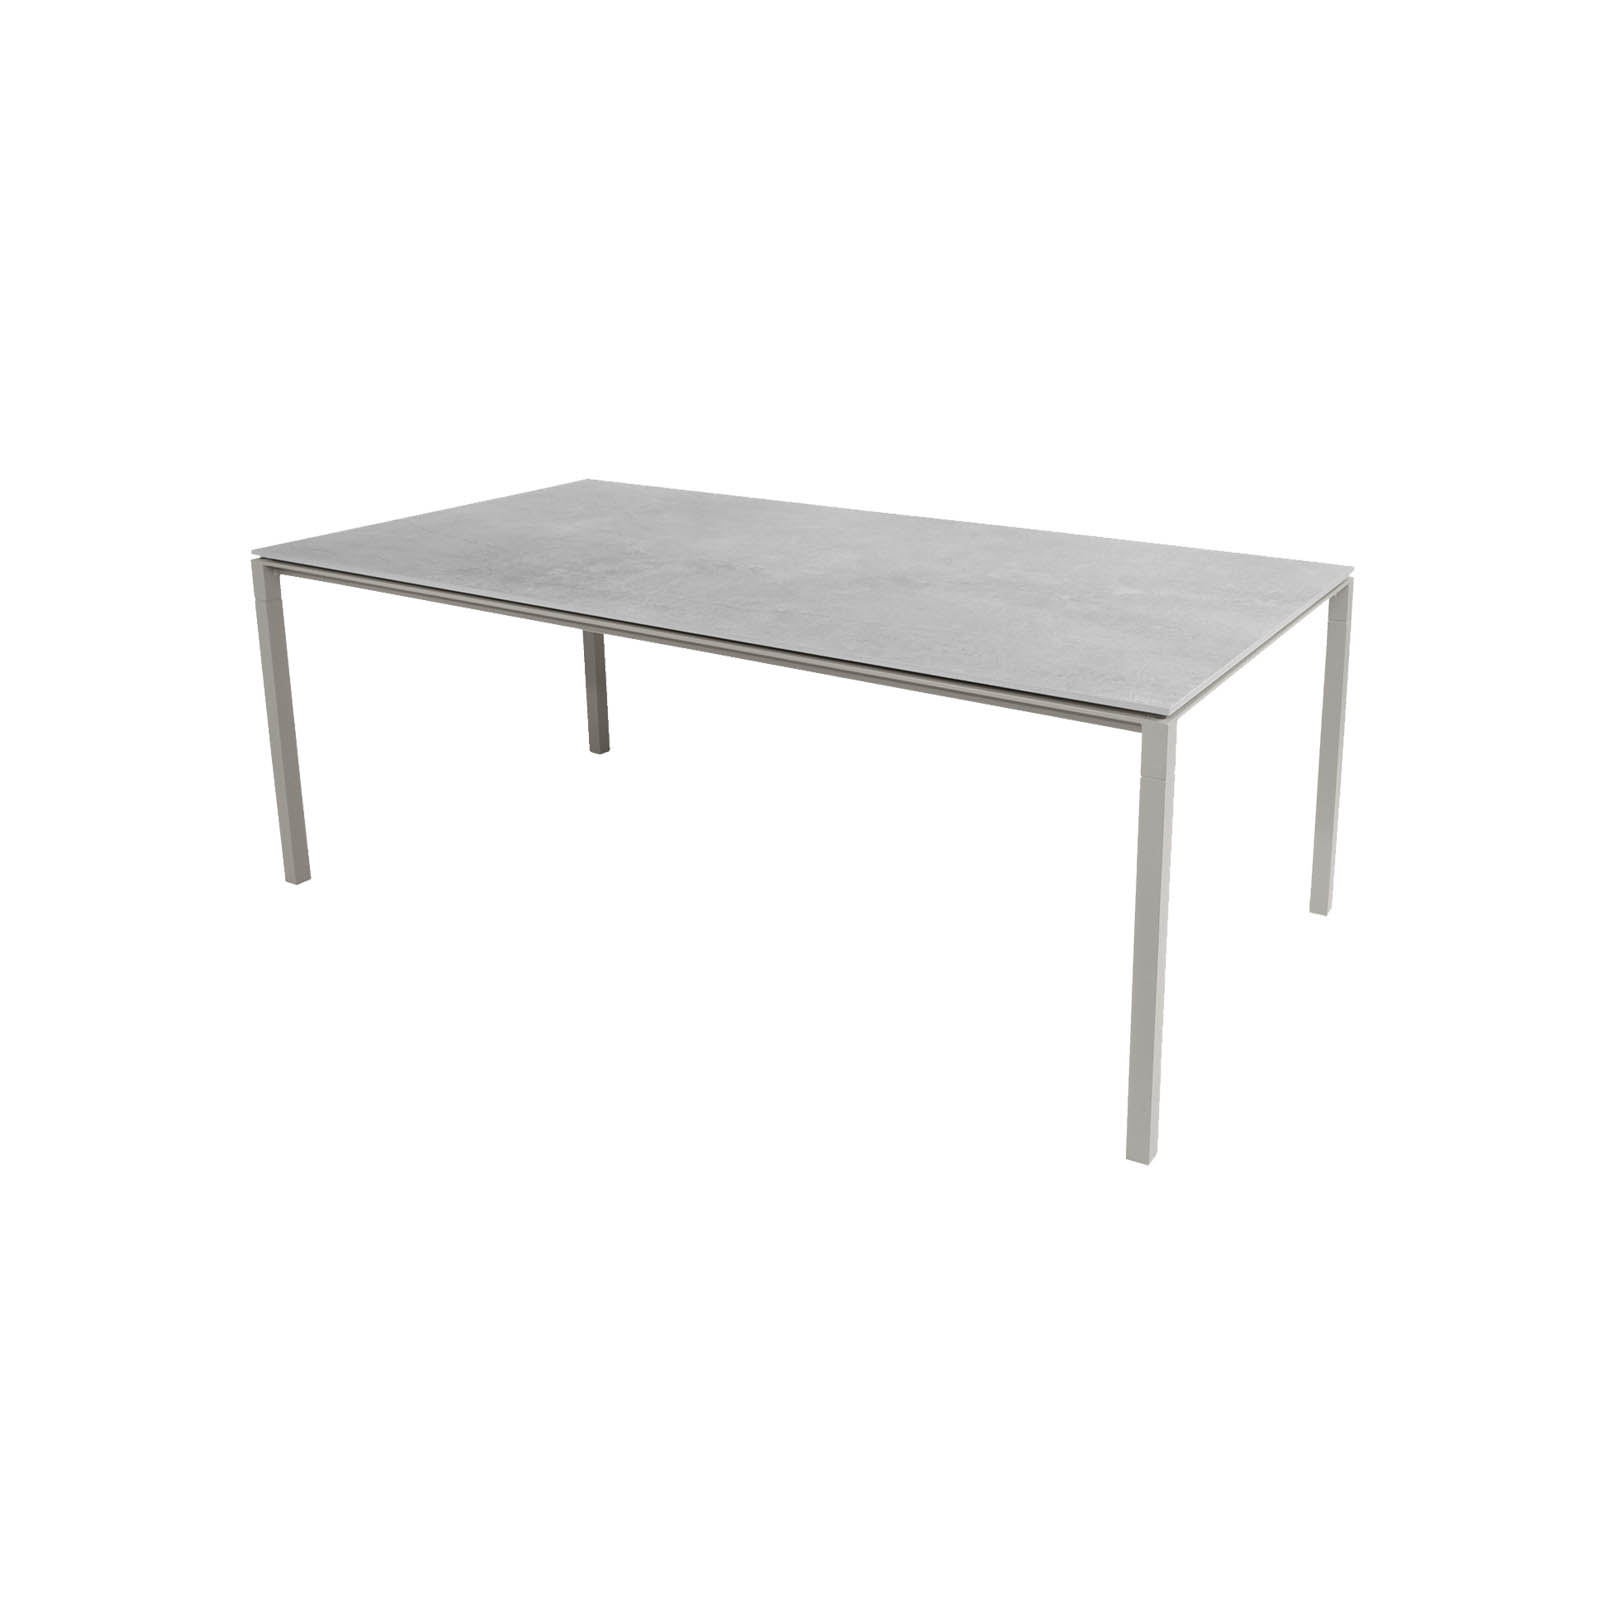 Tisch 200x100 cm Pure aus Aluminium in Taupe mit Tischplatte aus Ceramic in Fossil grey